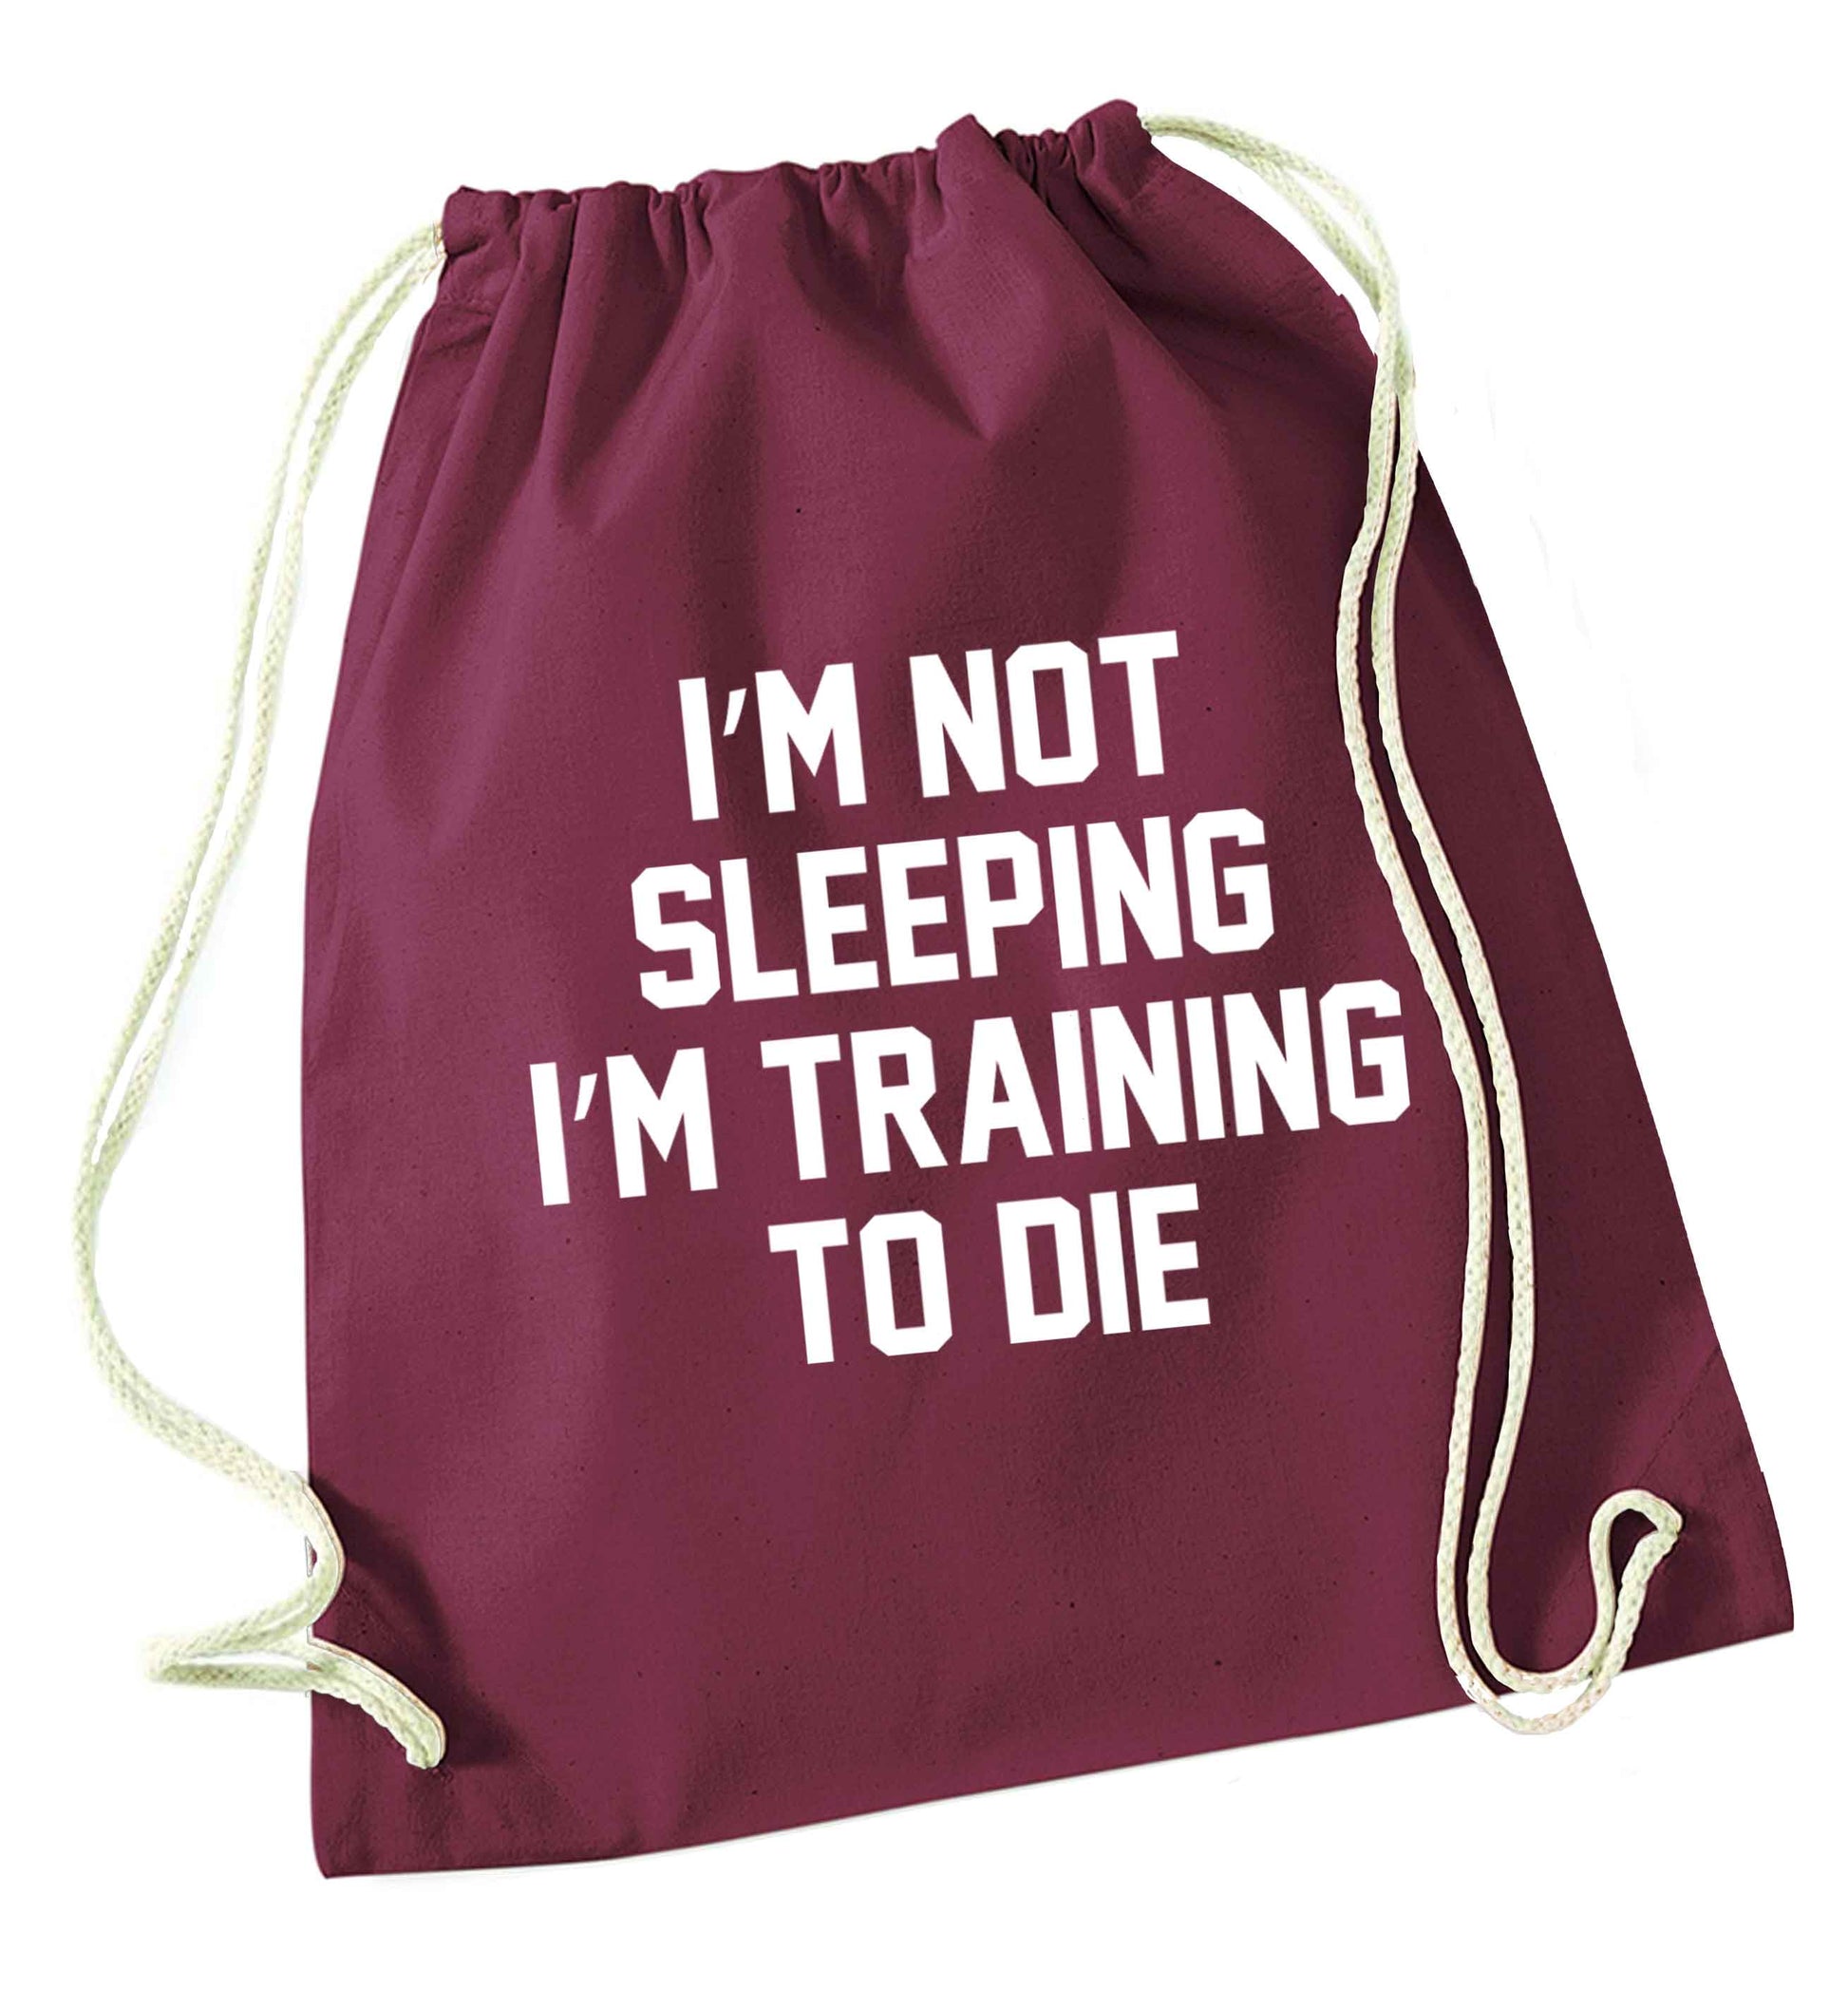 I'm not sleeping I'm training to die maroon drawstring bag